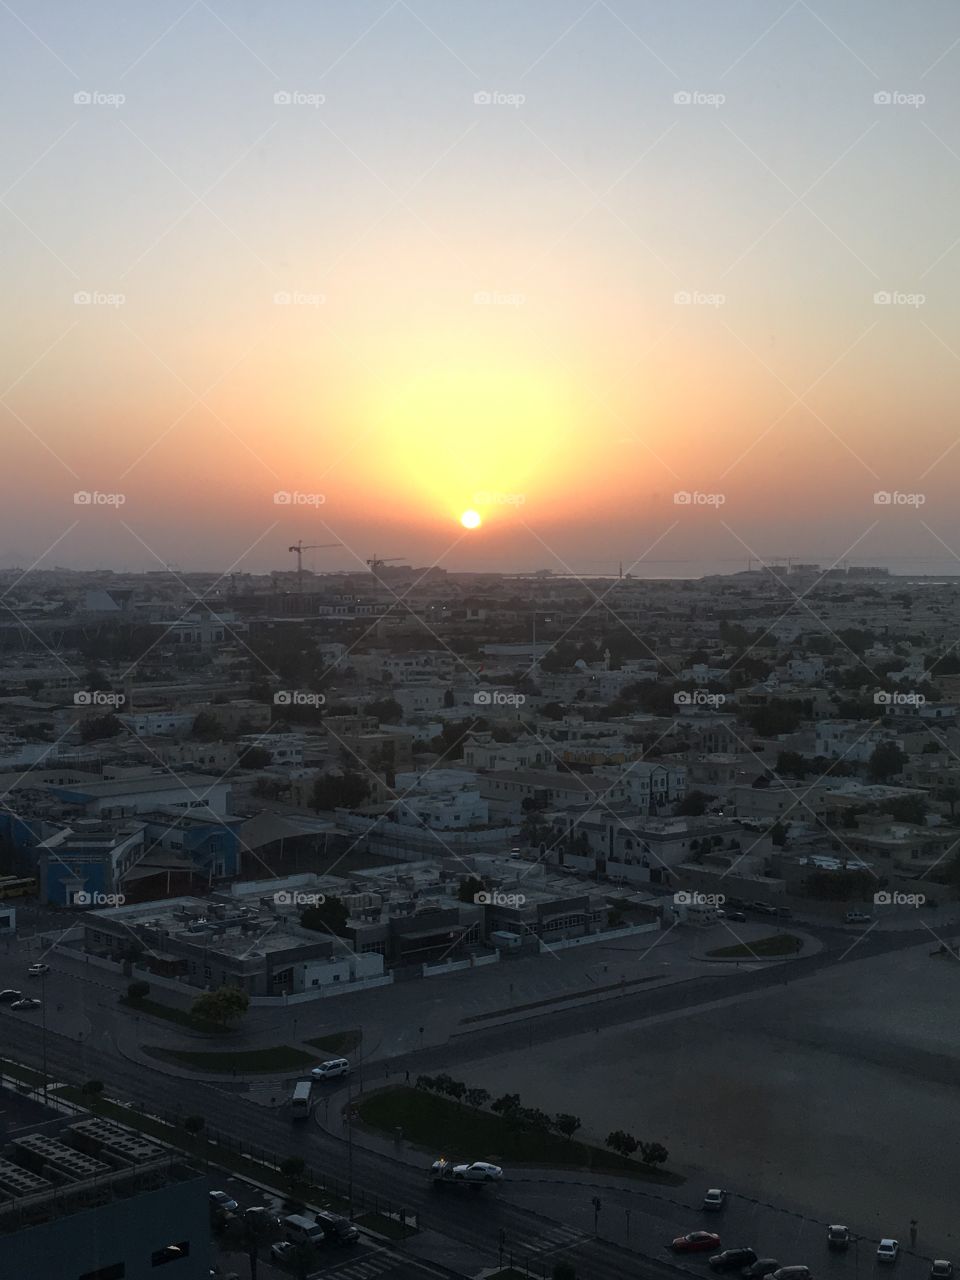 Sunset view over Persian Gulf in Dubai